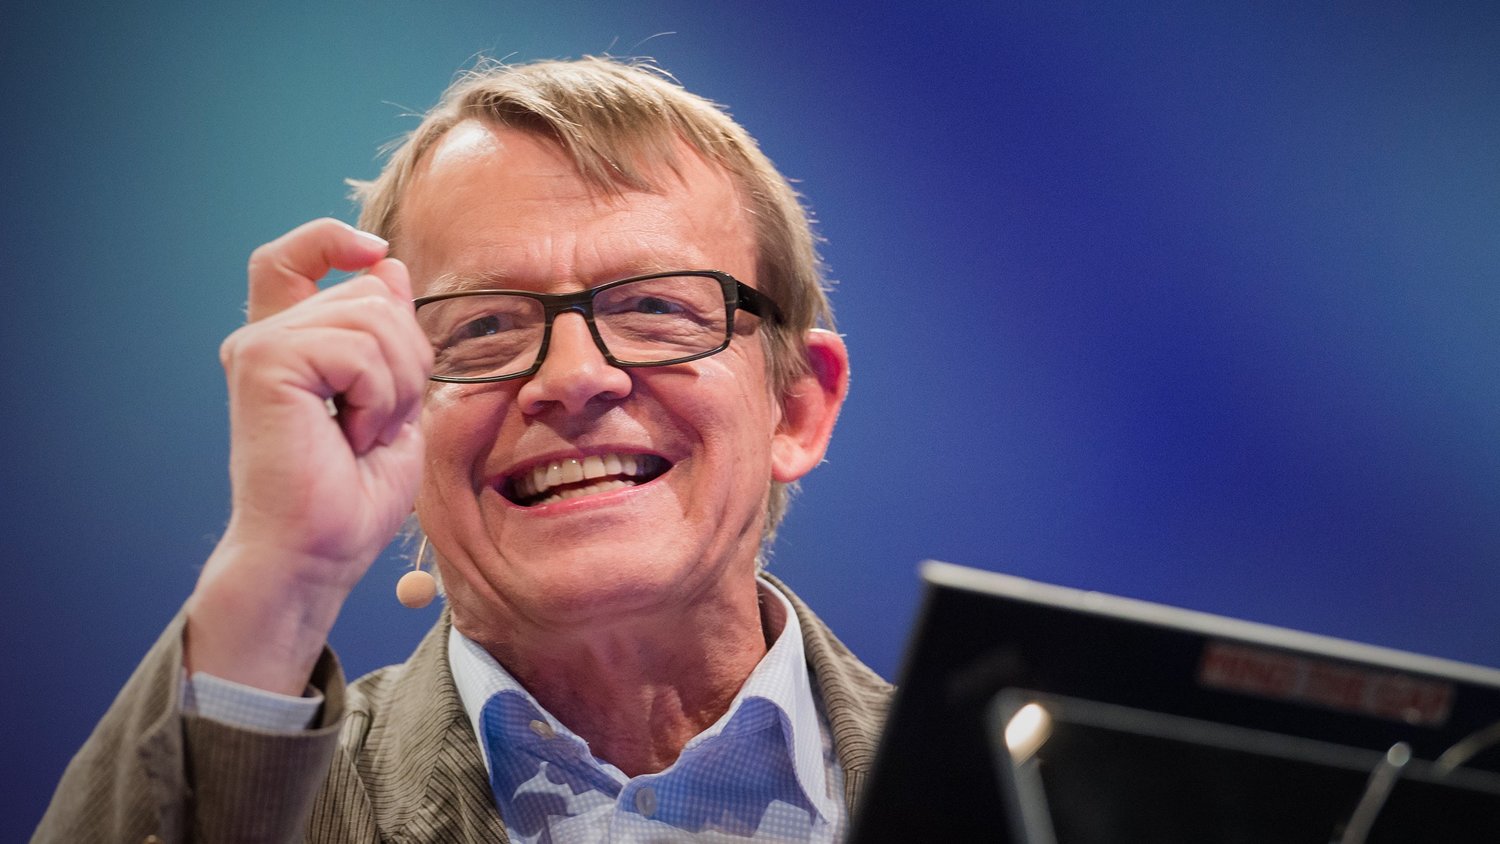 Sadly, Hans Rosling has died